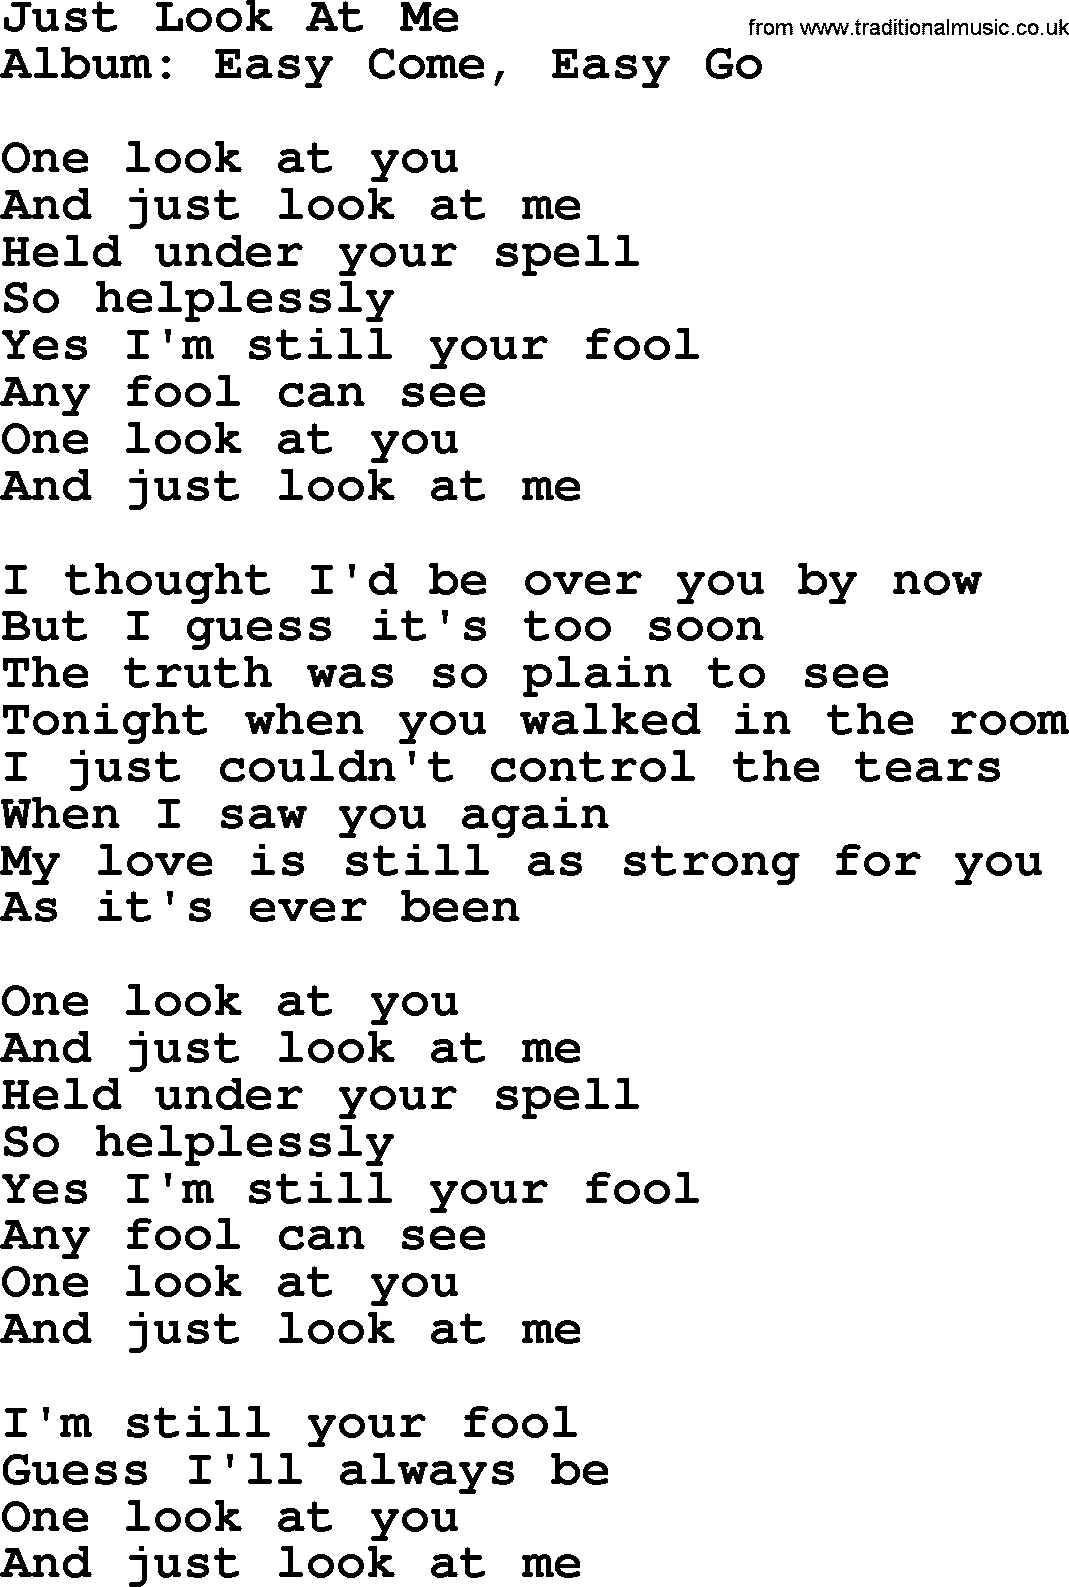 George Strait song: Just Look At Me, lyrics